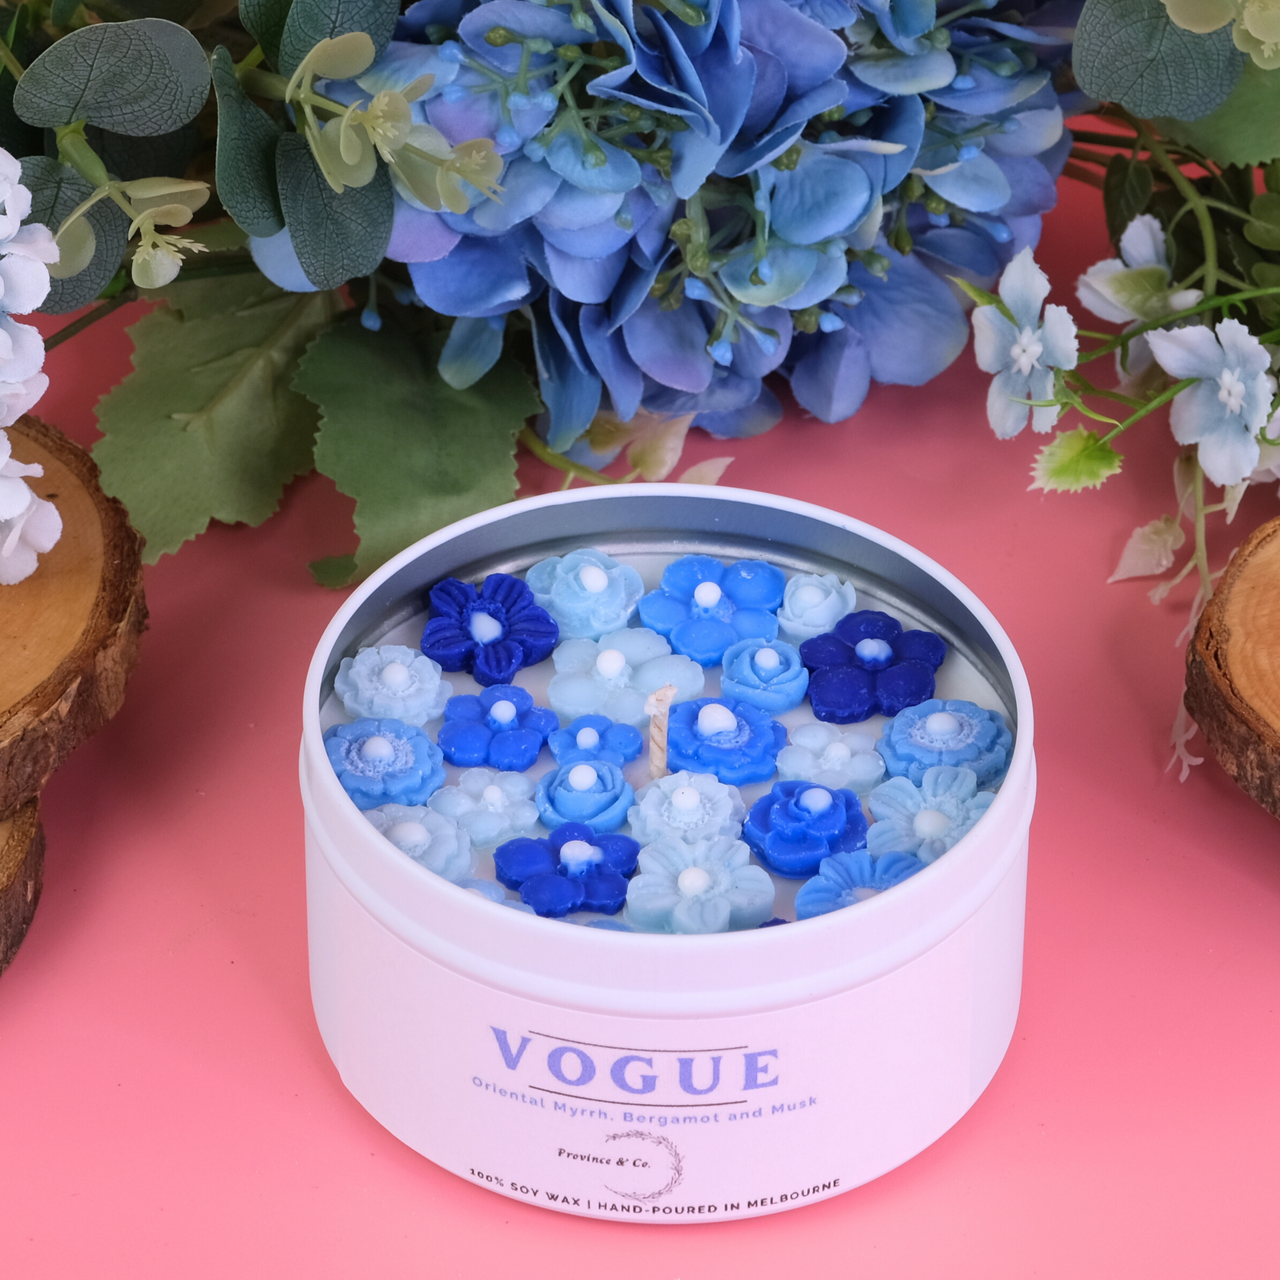 Vogue | Oriental Myrrh + Bergamot + Musk